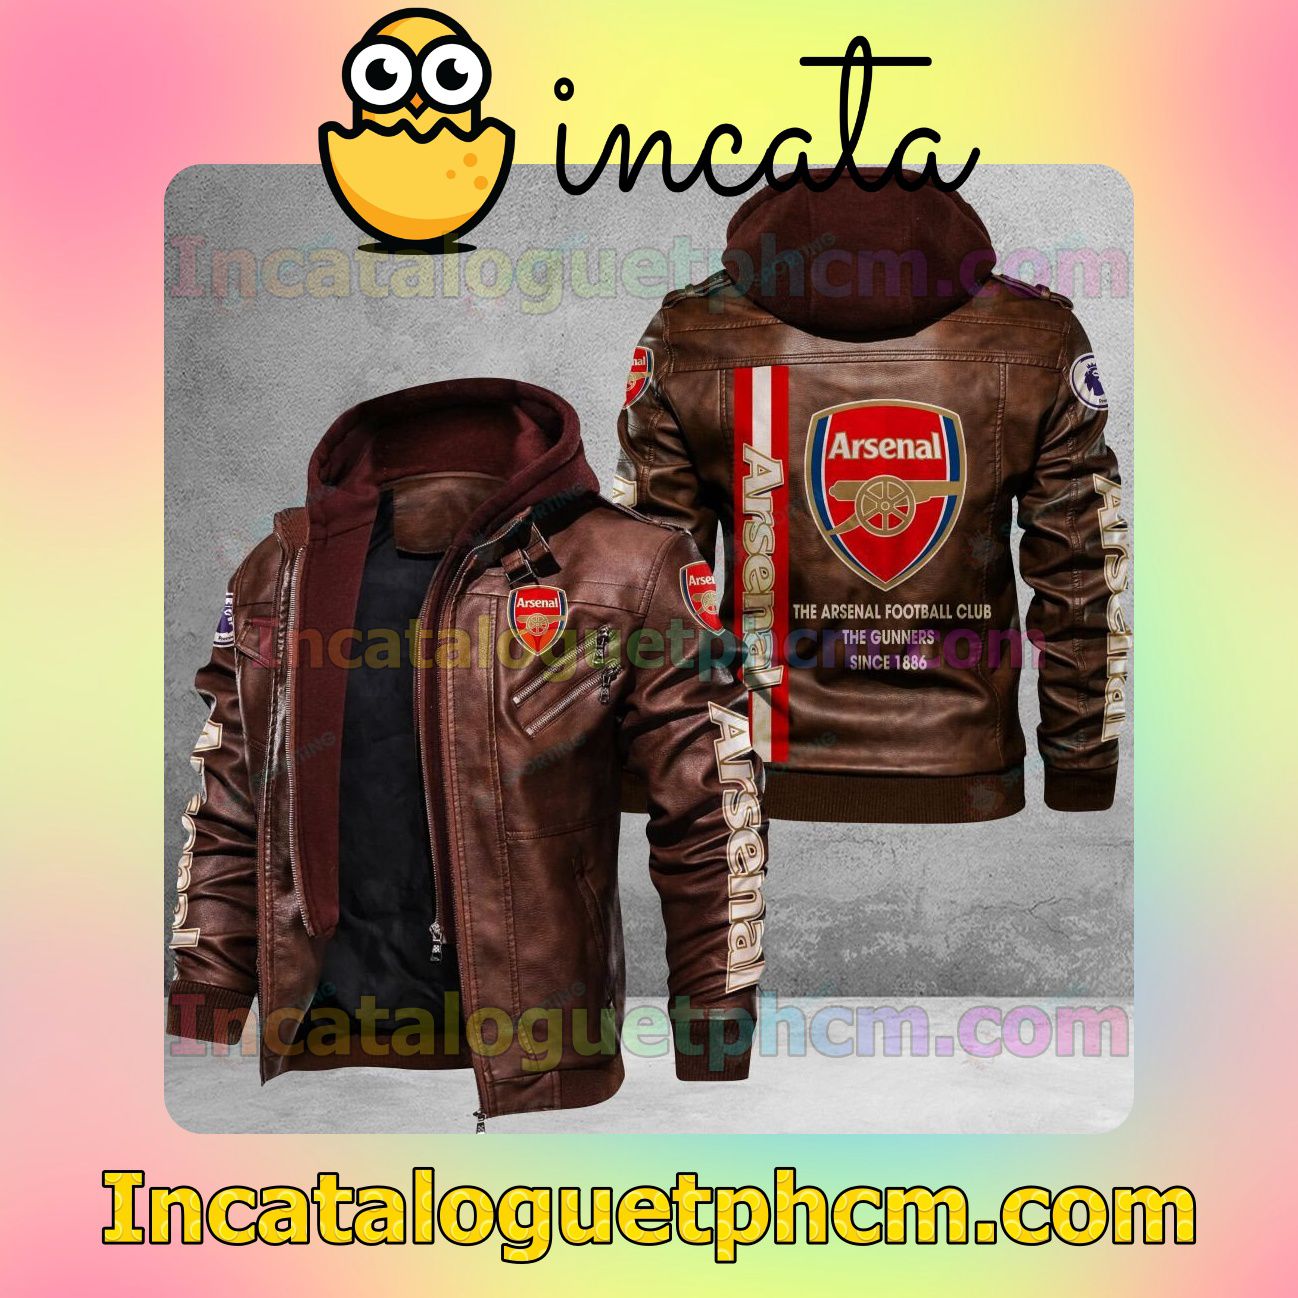 Gorgeous Arsenal F.C. Brand Uniform Leather Jacket